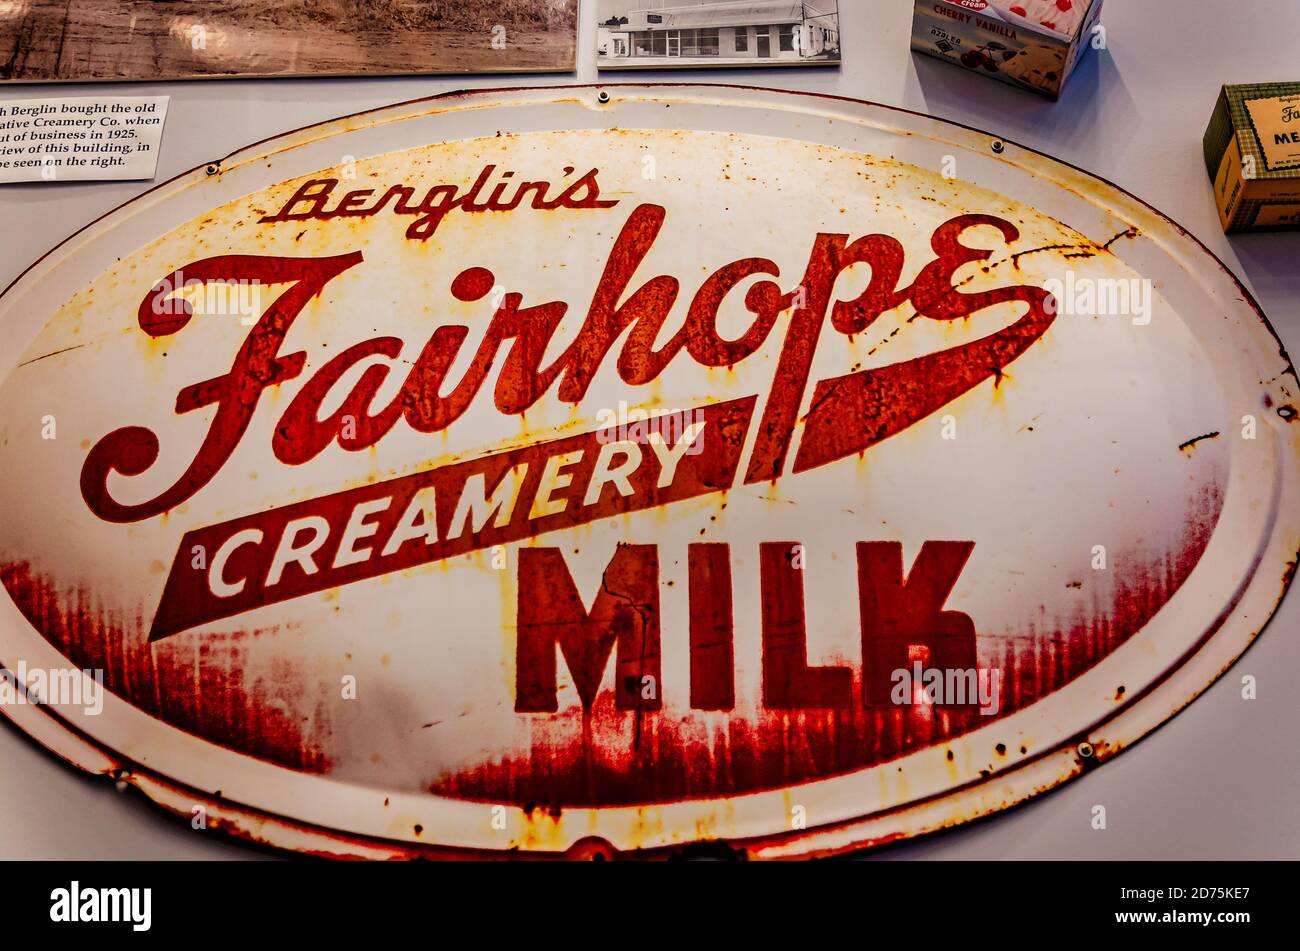 An old metal sign advertises Berglin’s Fairhope Creamery milk at Fairhope Museum of History, Oct. 17, 2020, in Fairhope, Alabama. Stock Photo